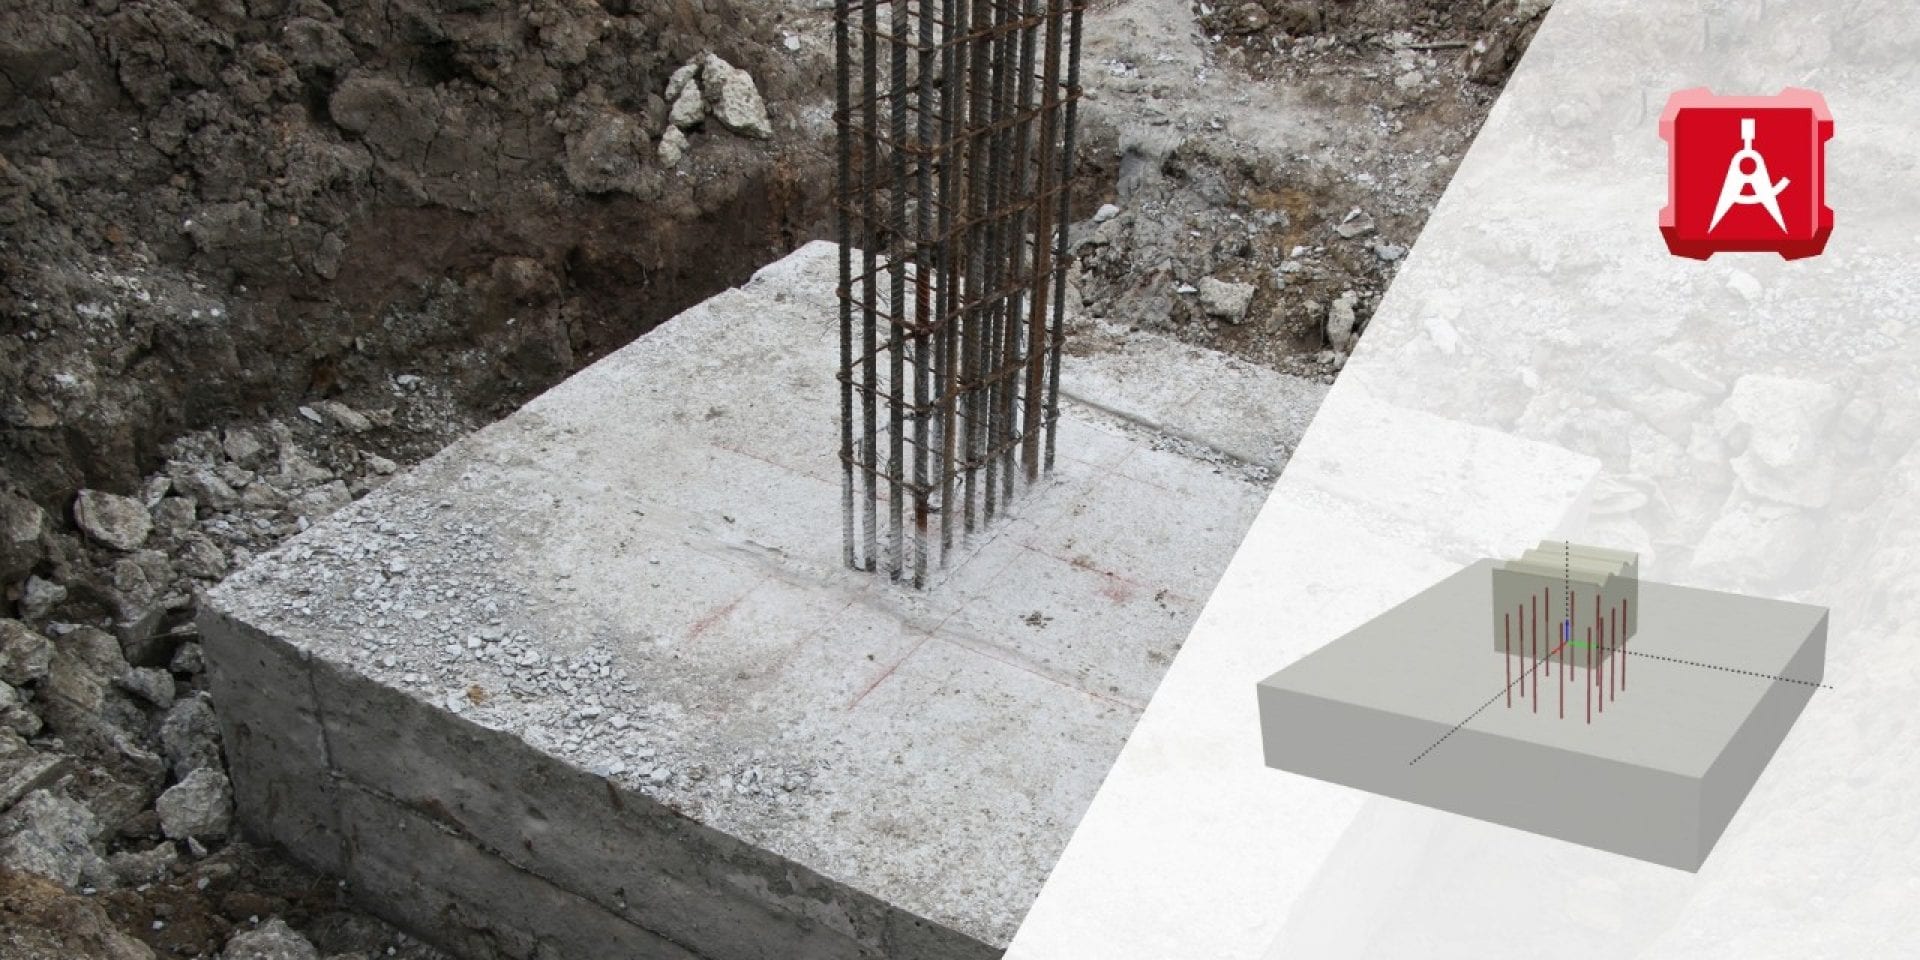 Concrete-to-concrete connection design